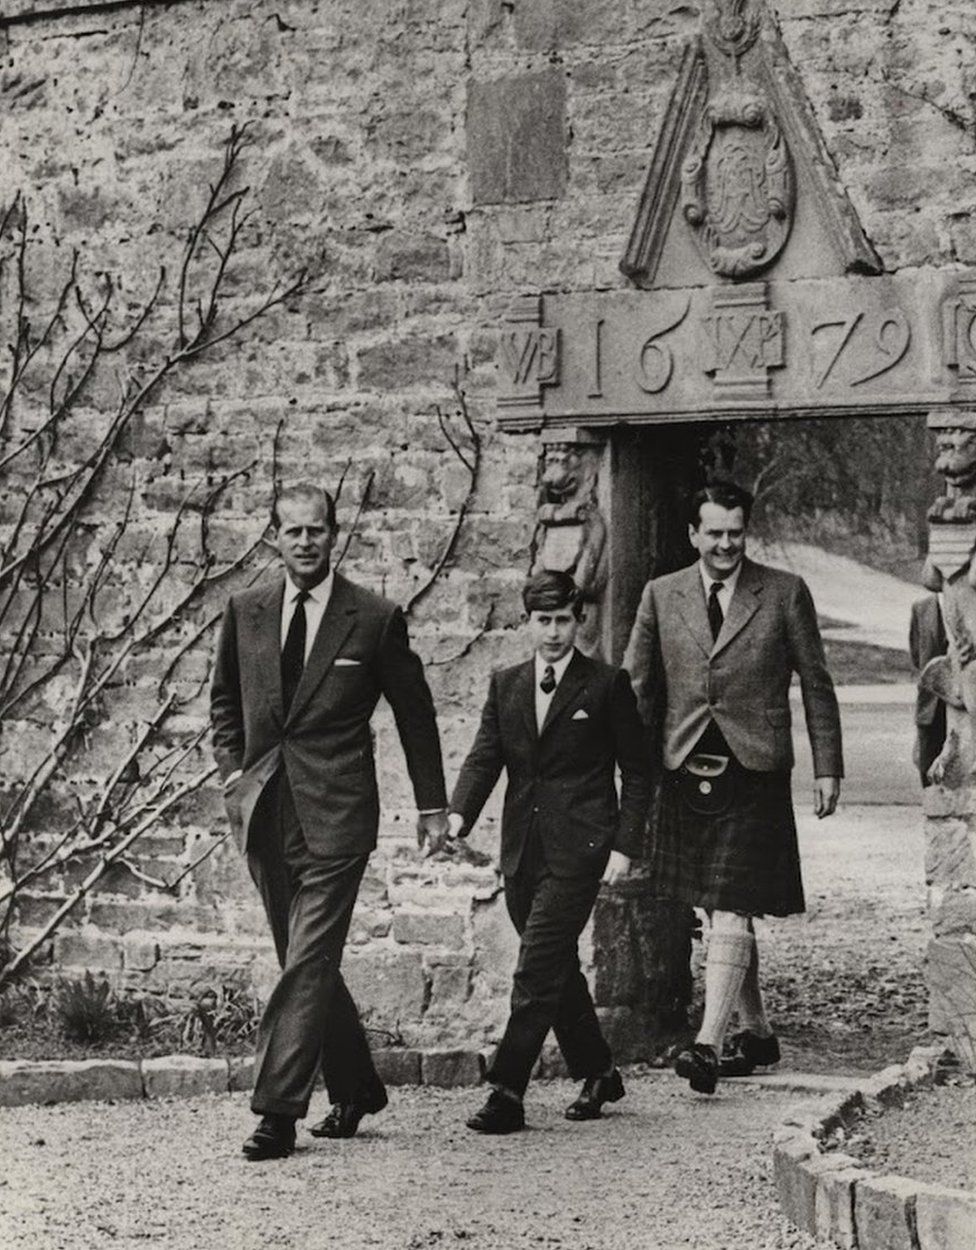 King Charles arrives at Gordonstoun, accompanied by the Duke of Edinburgh